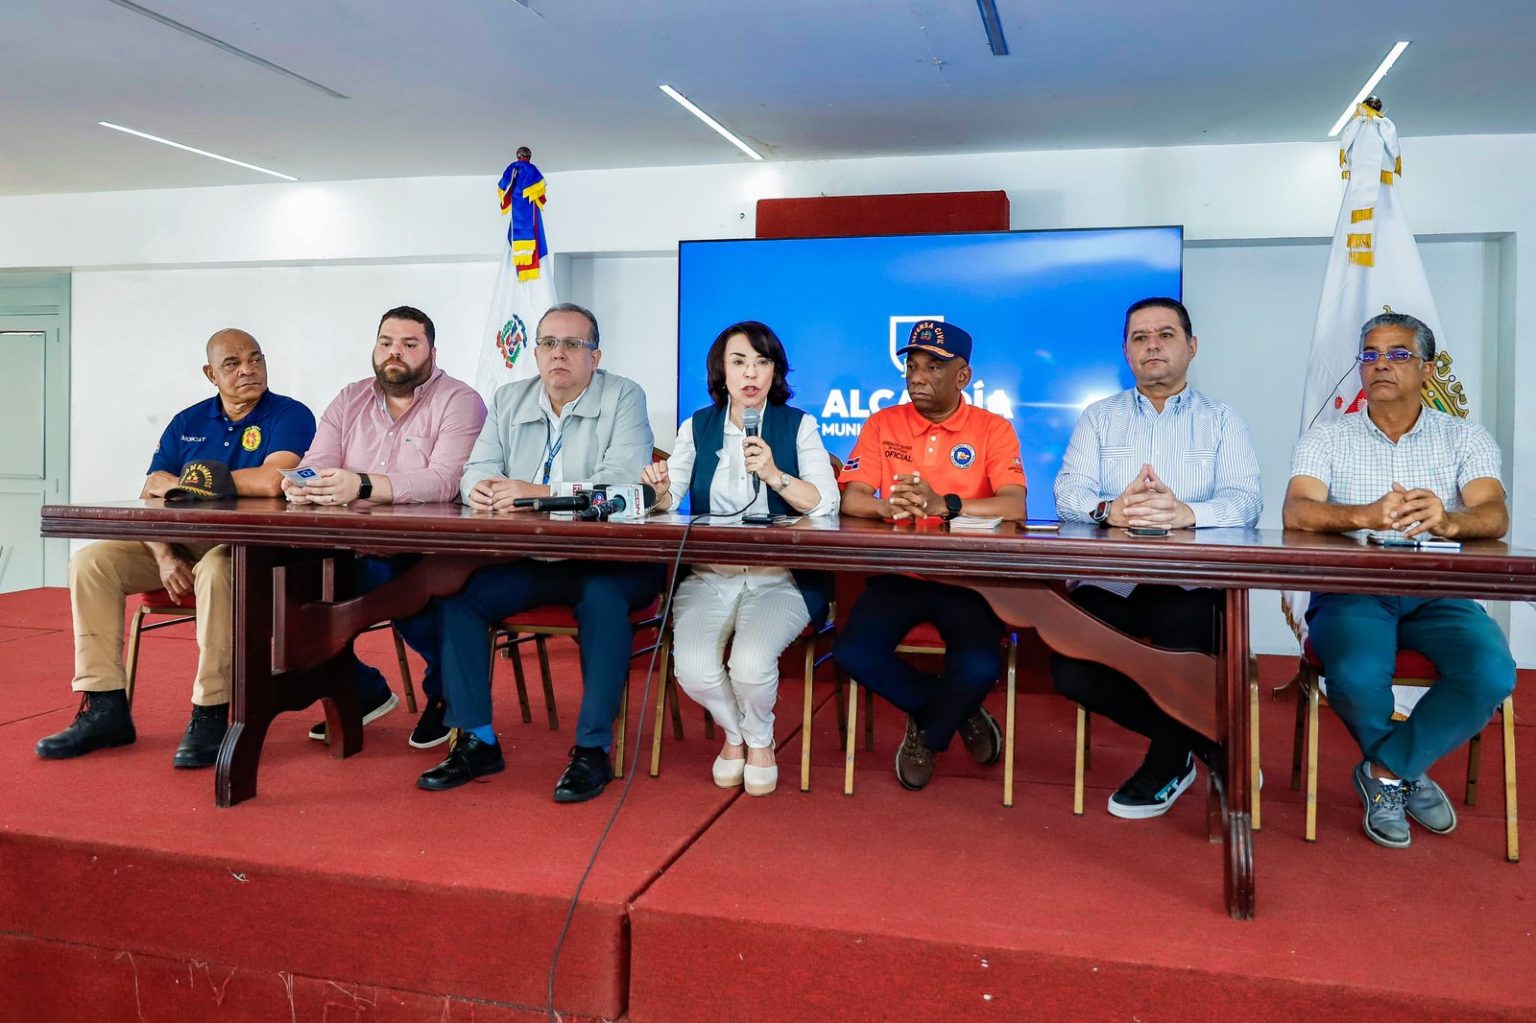 Alcaldia de Santiago activa Comite de Prevencion